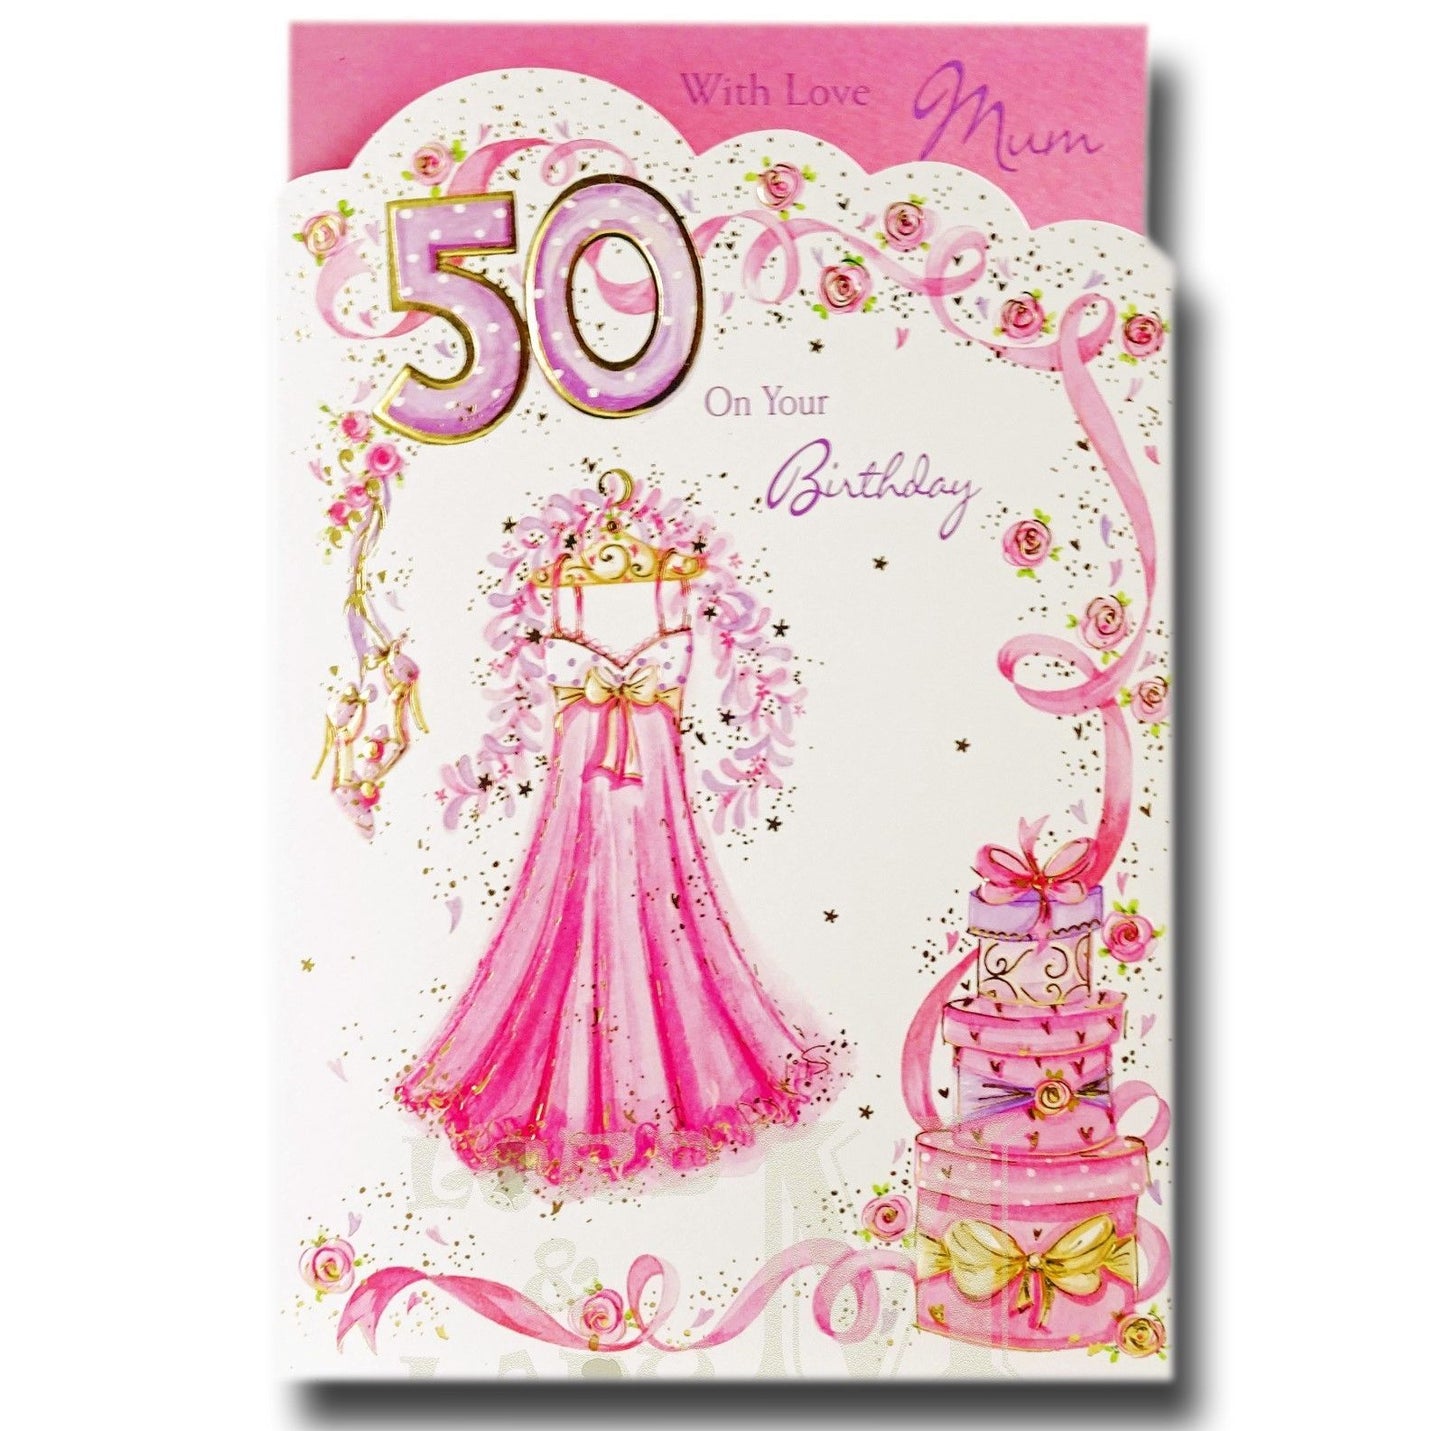 23cm - With Love Mum On Your Birthday 50